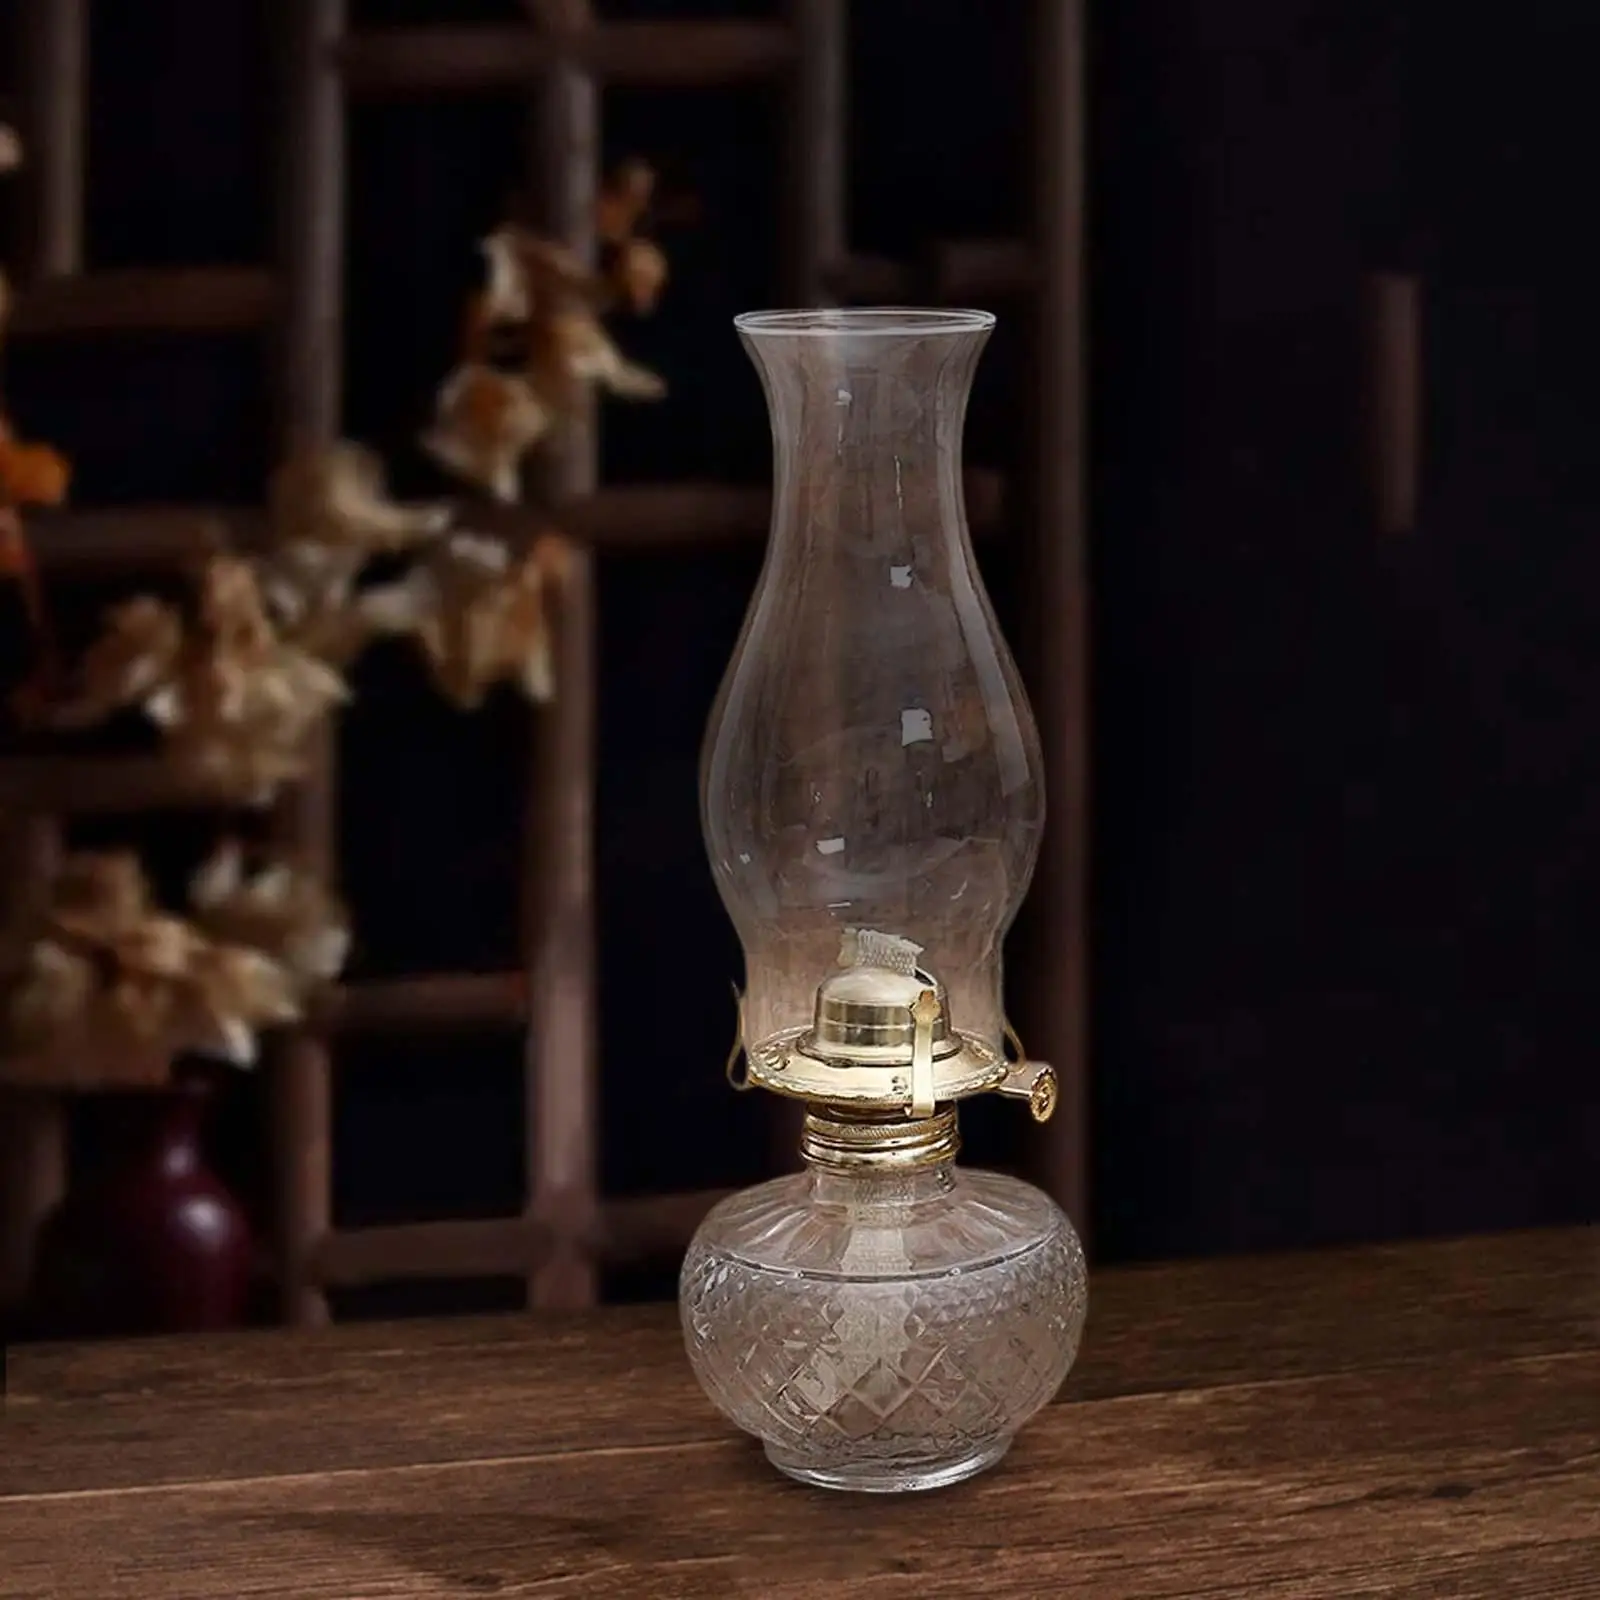 Rustic Oil Lantern Table Lantern Durable for Bedroom Festival Home Church Centerpiece